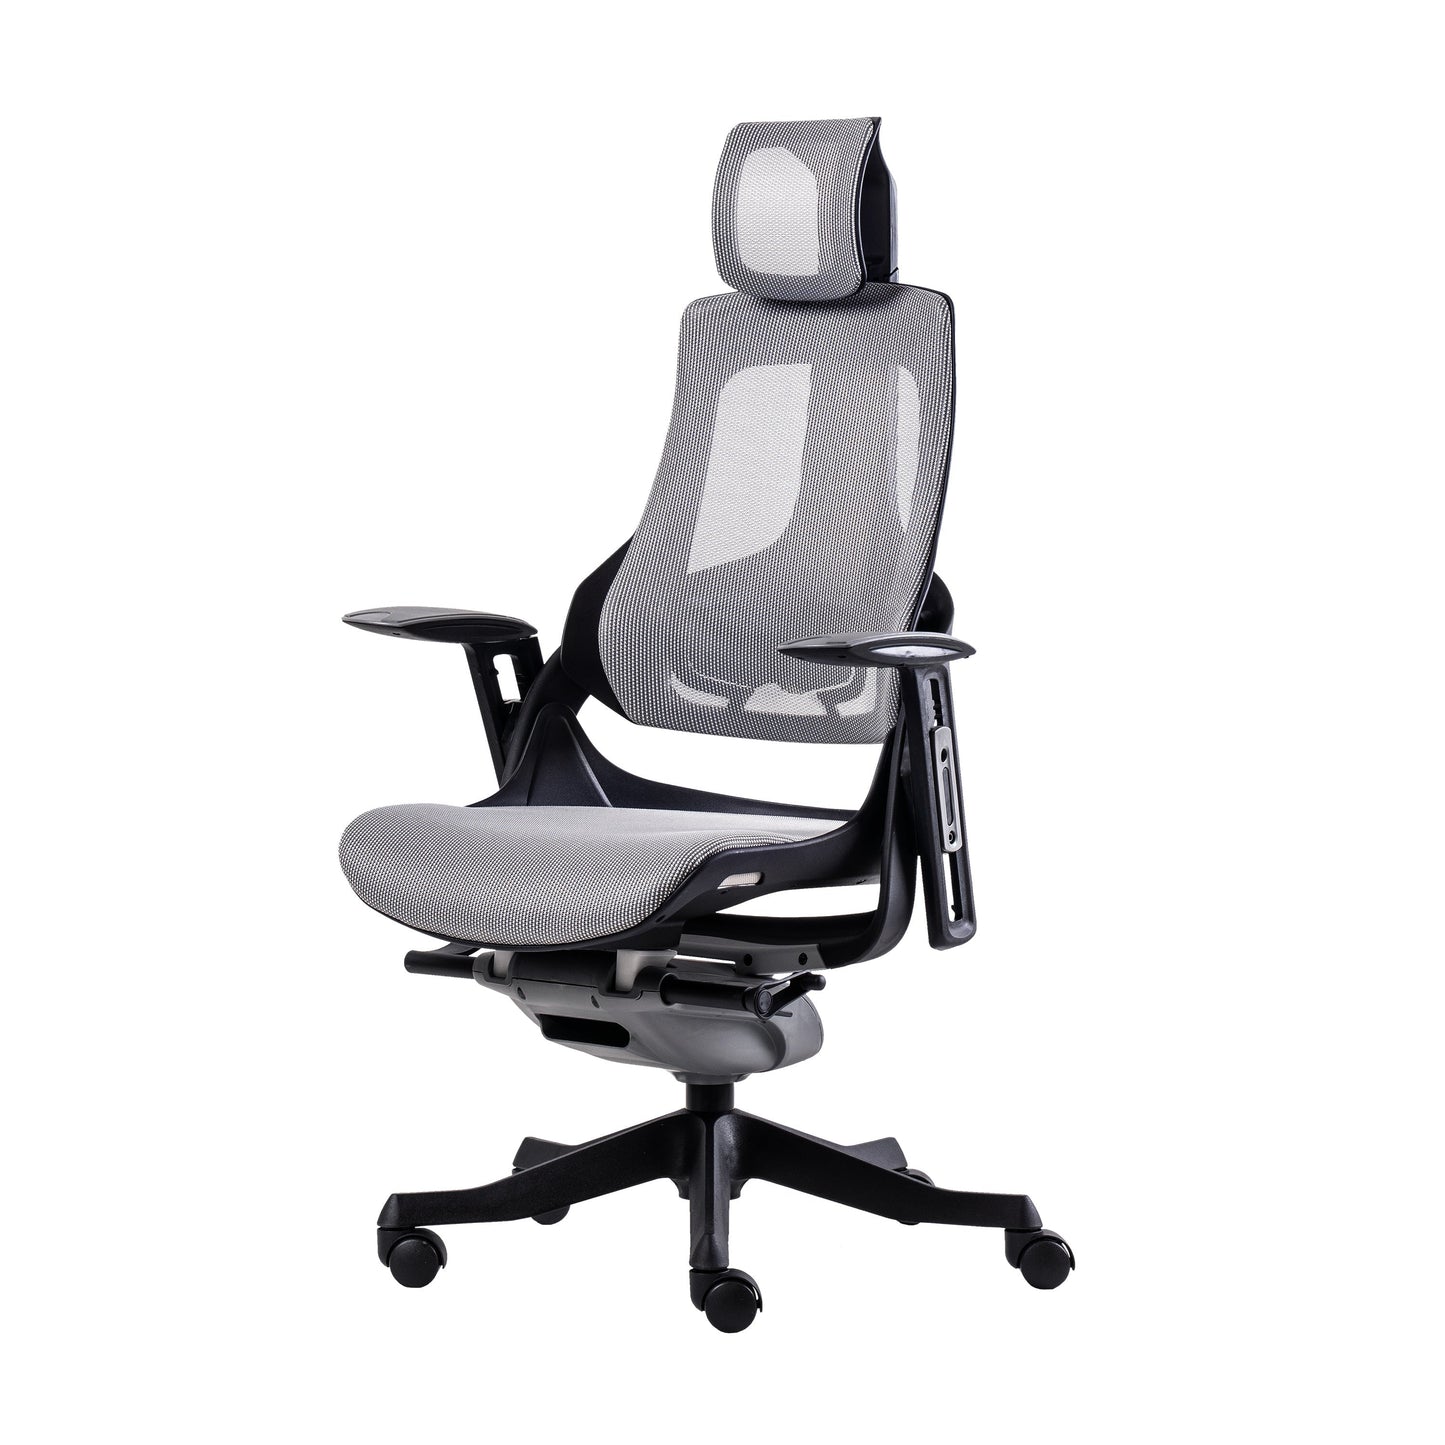 Techni Mobili LUX Ergonomic Executive Chair, Grey